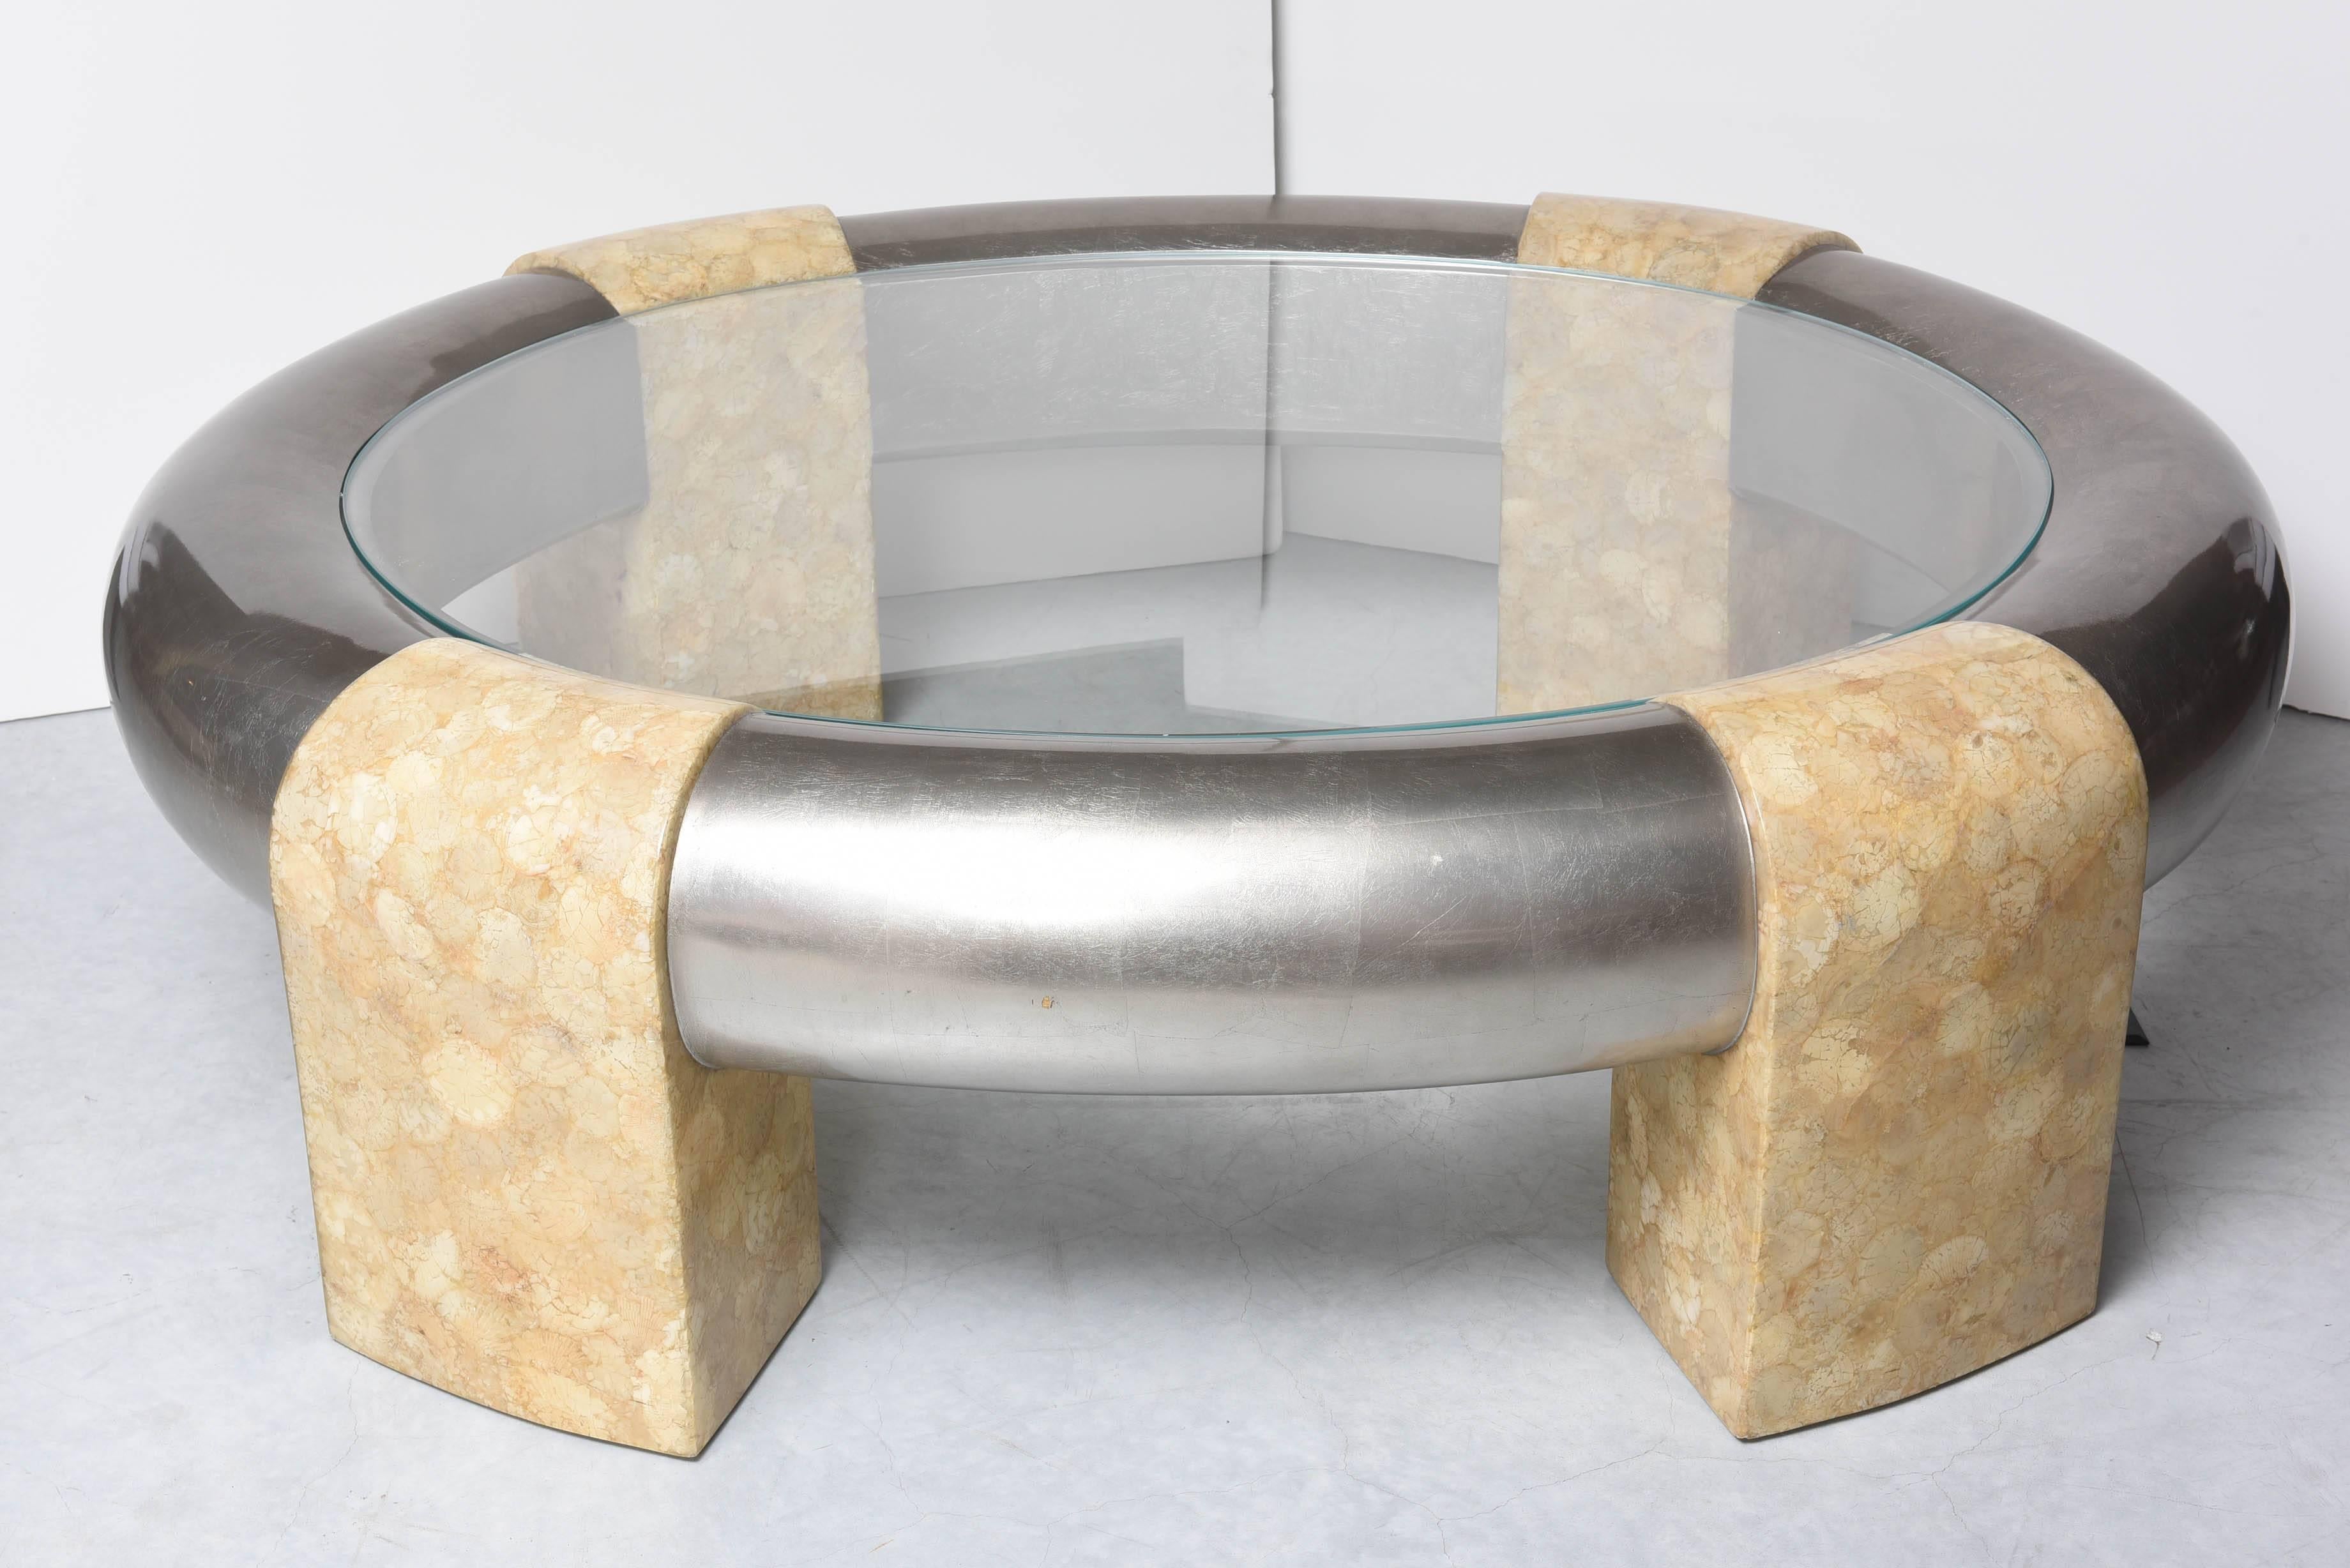 North American Huge Oval Coffee Table SilverGilt Woodframe Tessellated Stone Legs Suberb 